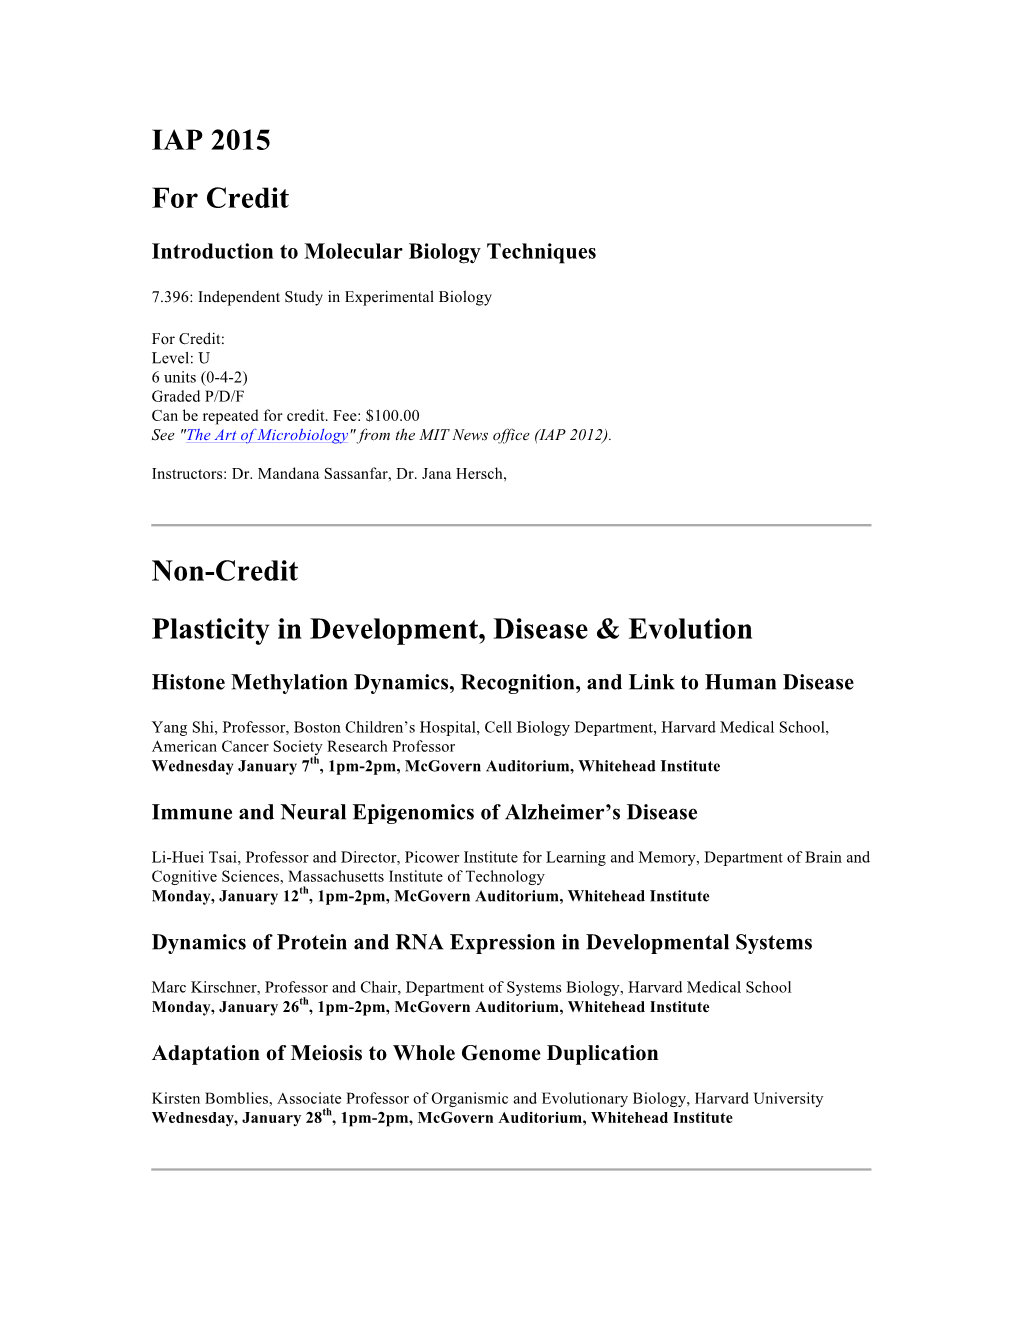 IAP 2015 for Credit Non-Credit Plasticity in Development, Disease